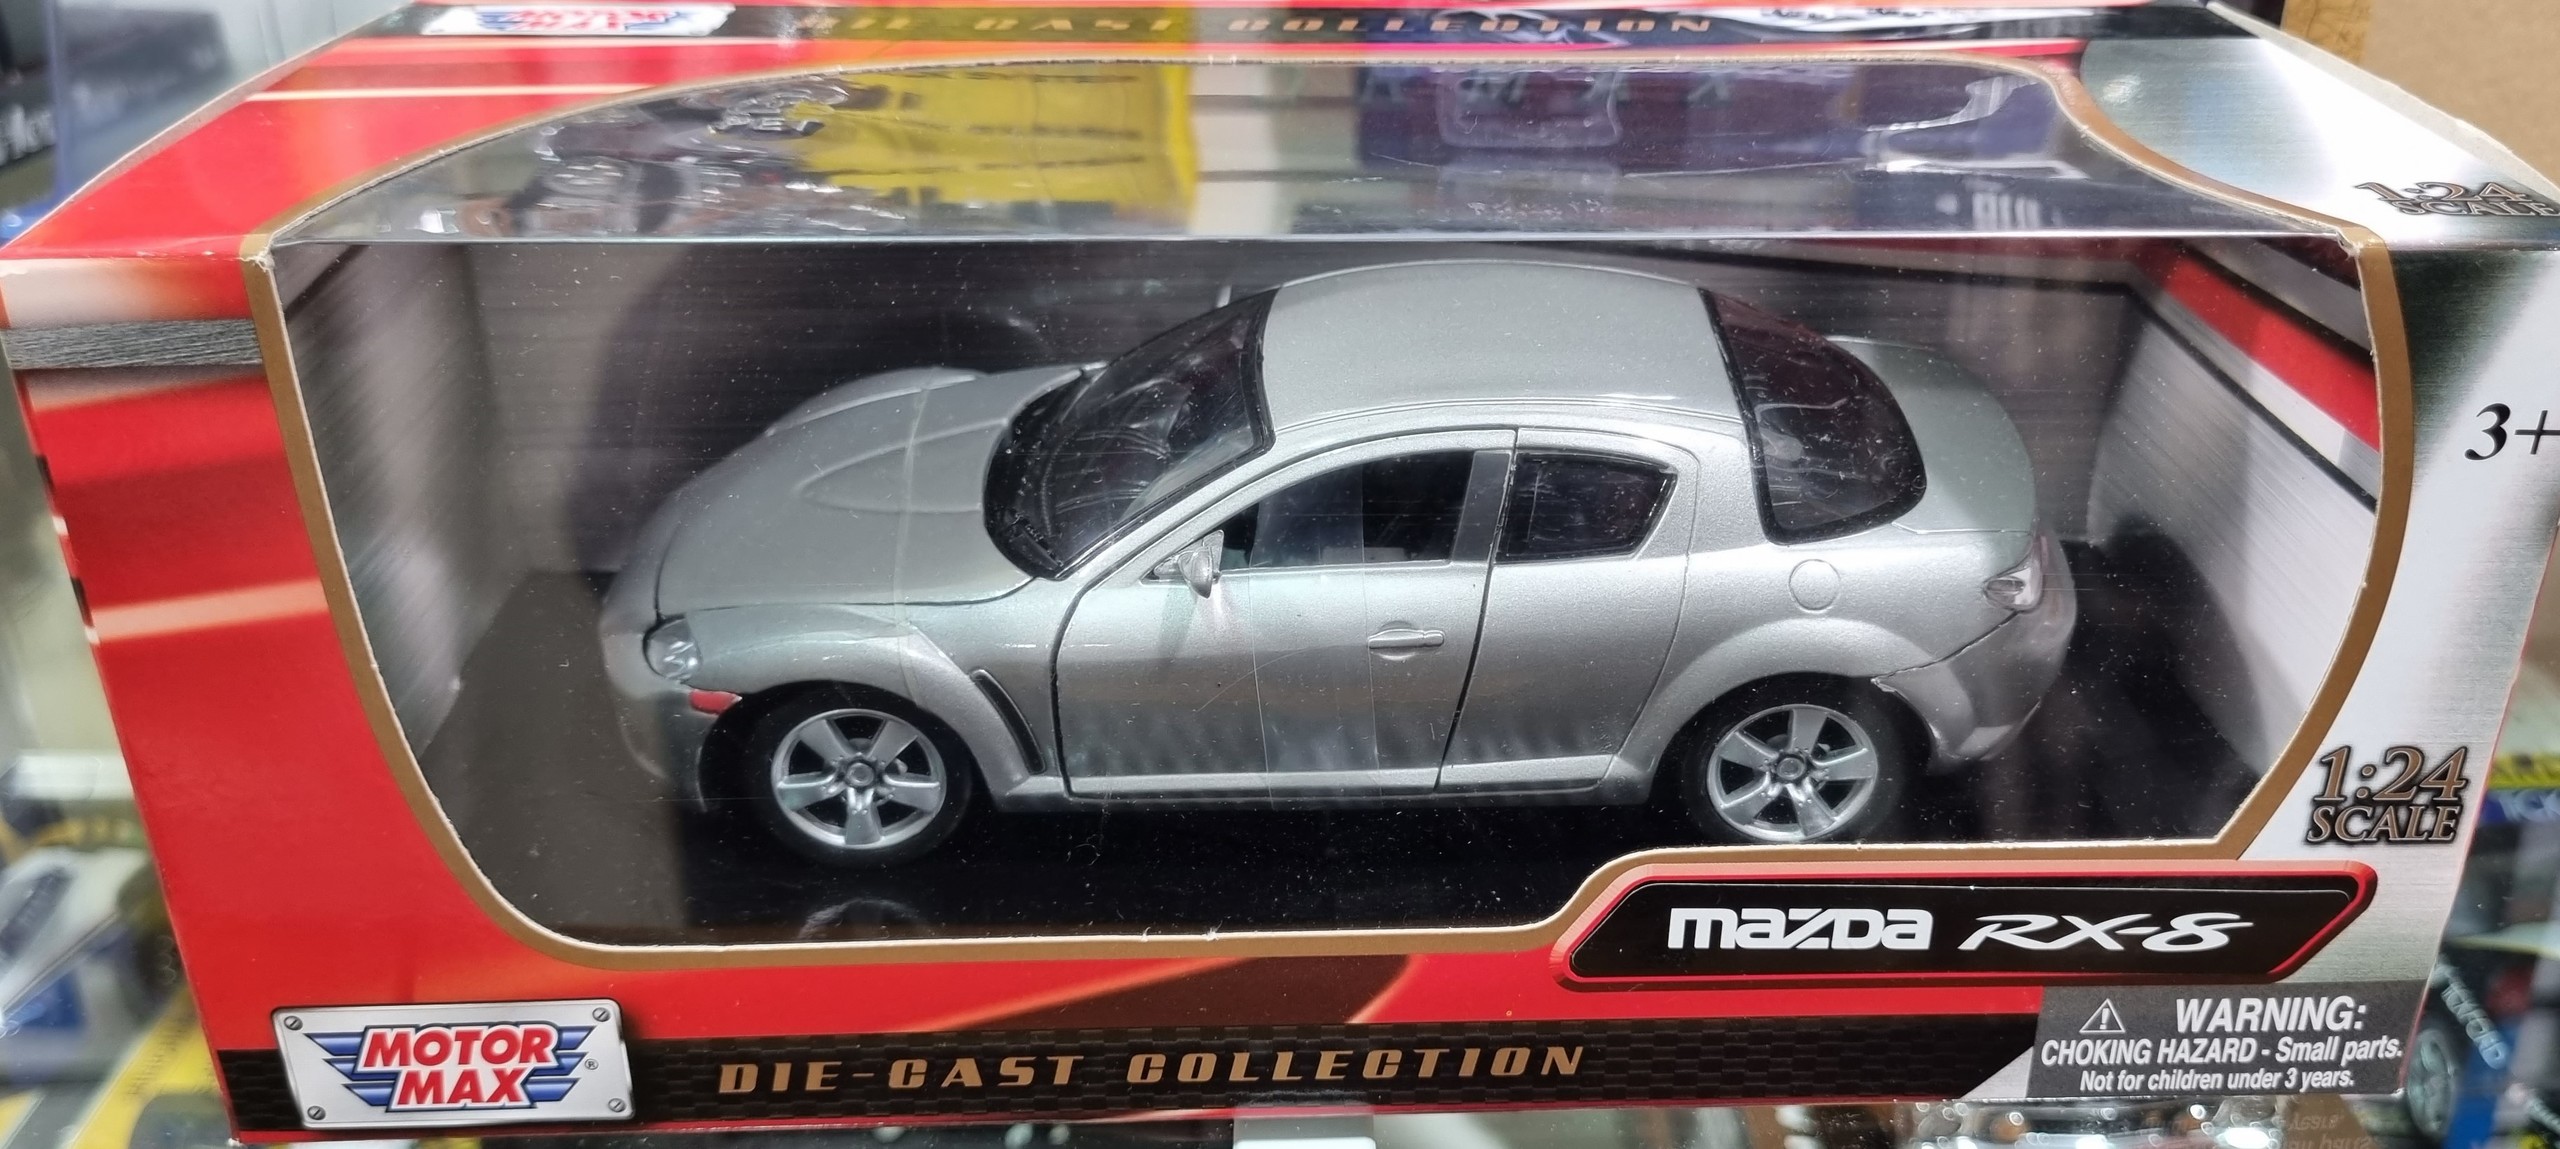 Mazda RX-8 Silver Roadcar 1/24 Motor Max